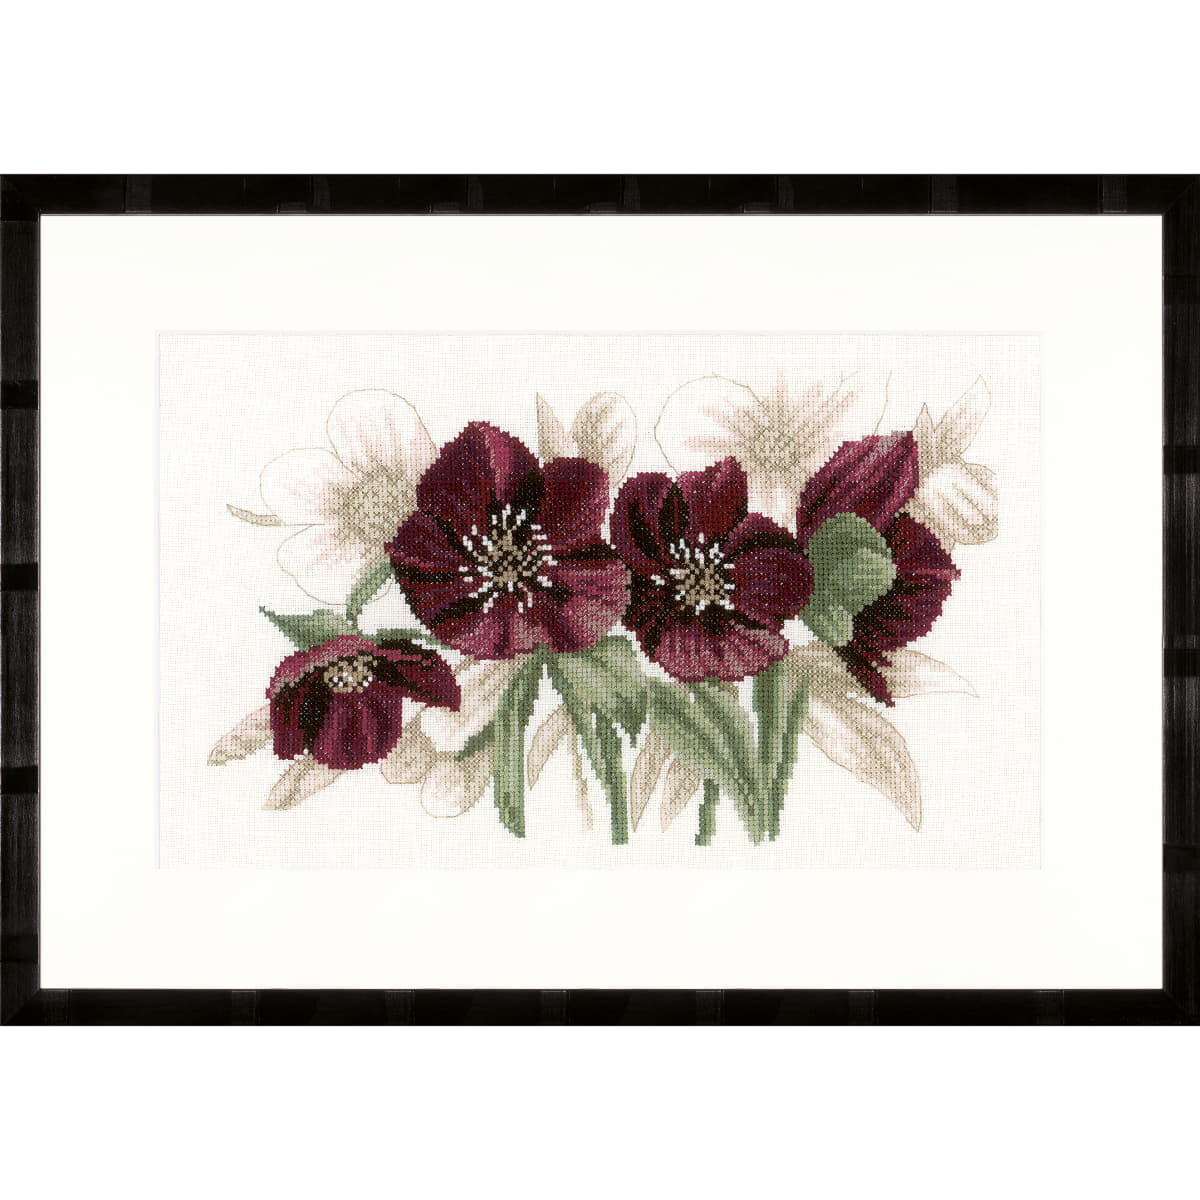 A framed picture of a floral arrangement by Lanarte...